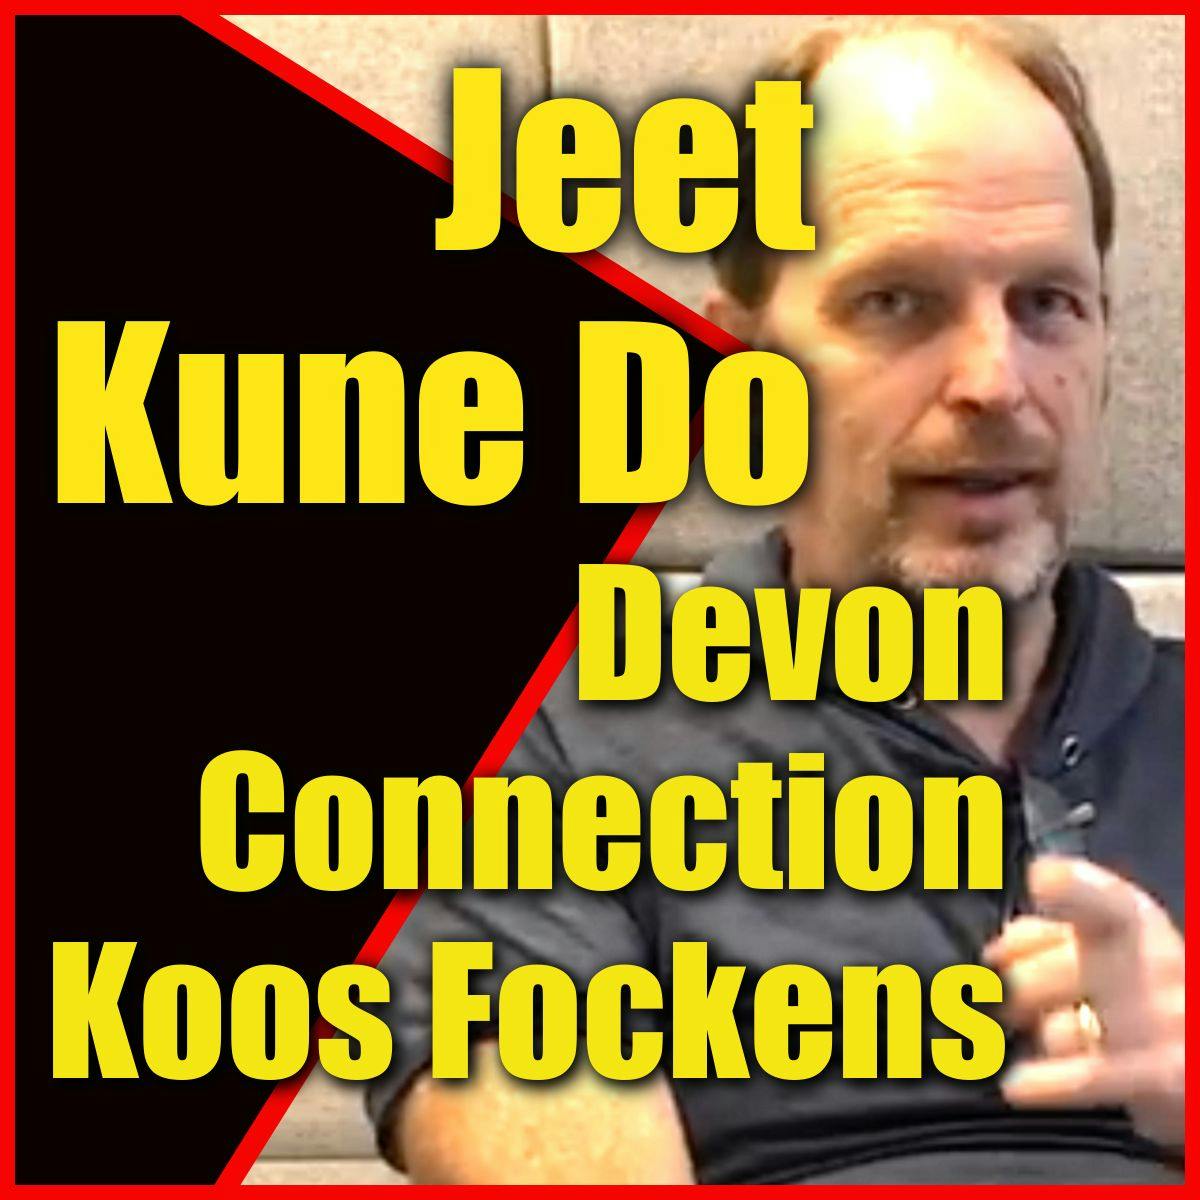 Jeet Kune Do Devon Connection Koos Fockens